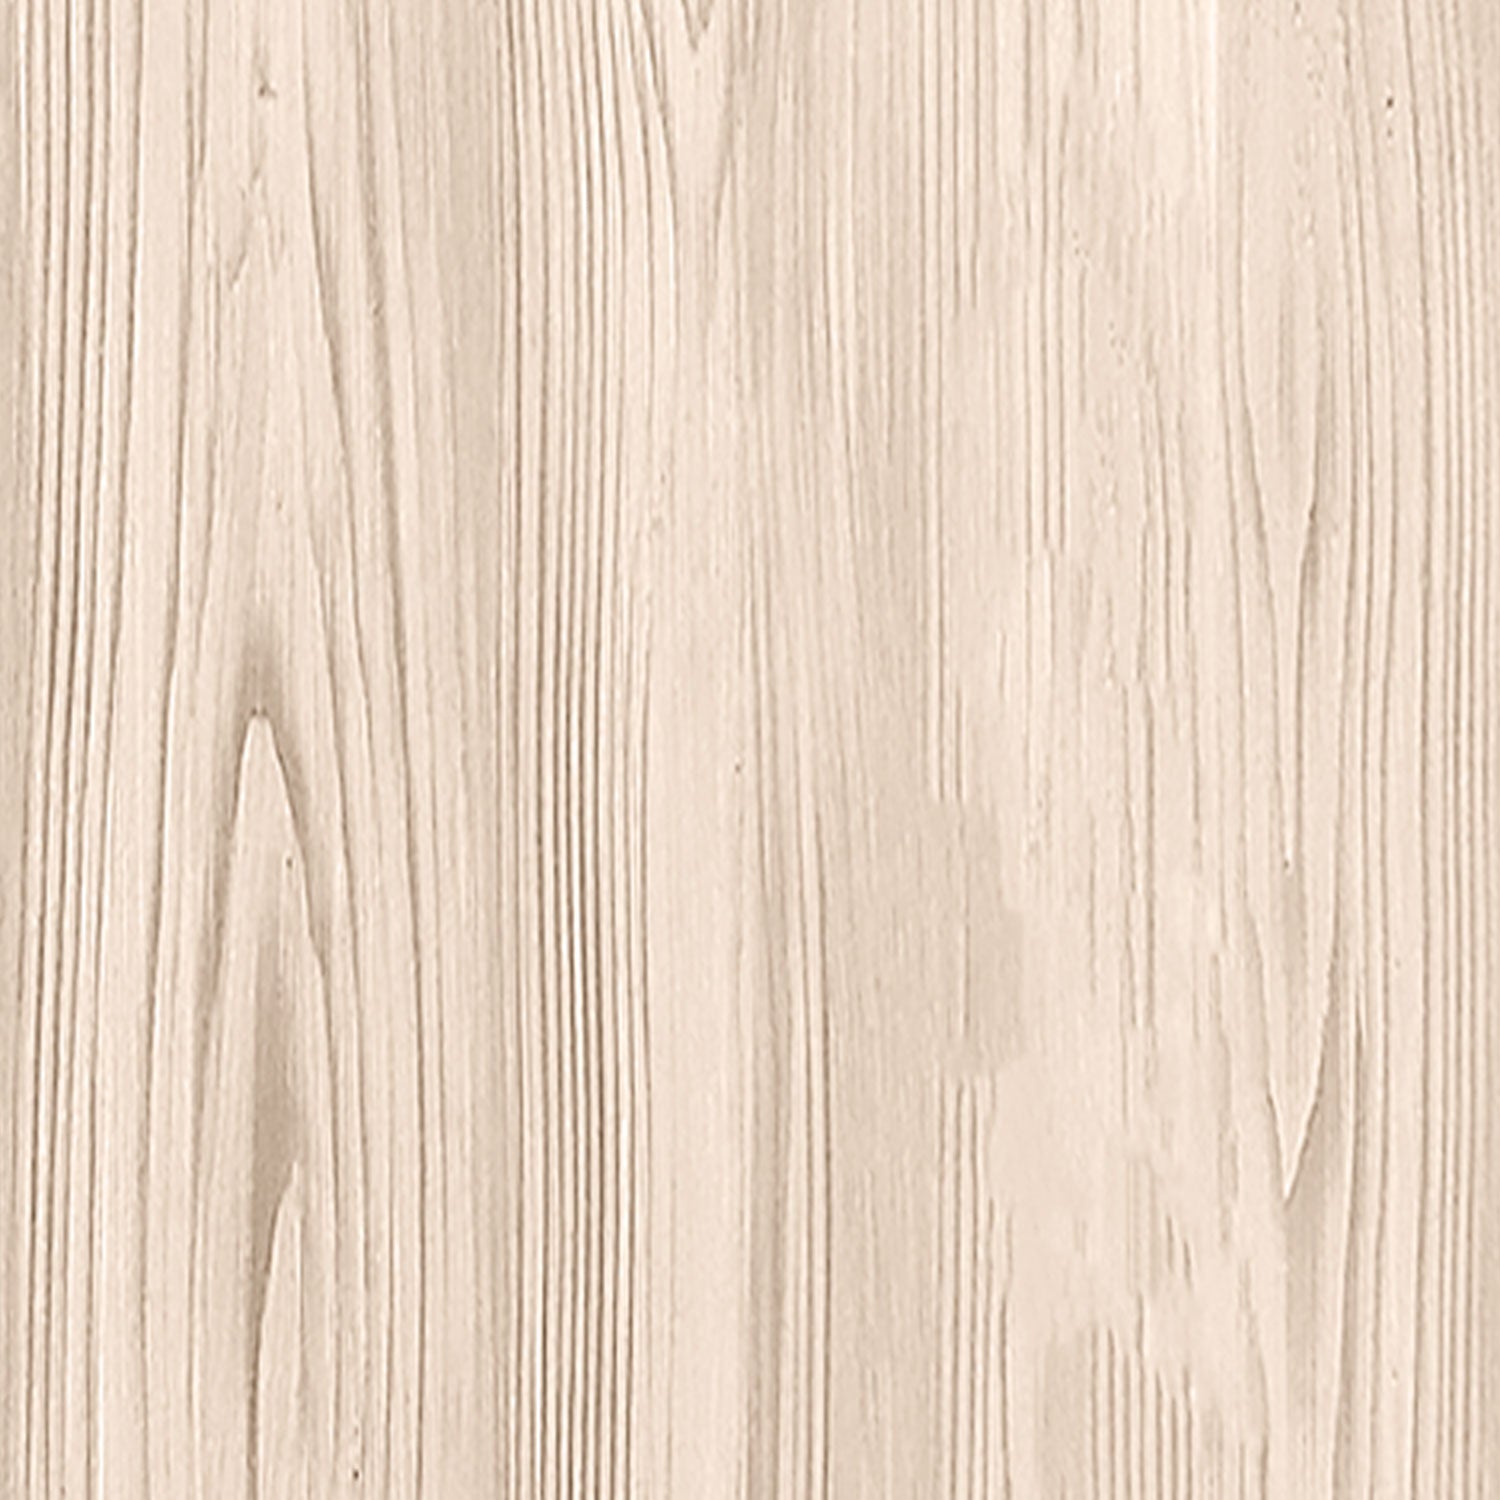 Multi-purpose Wood'n Kit (Large) - White Oak